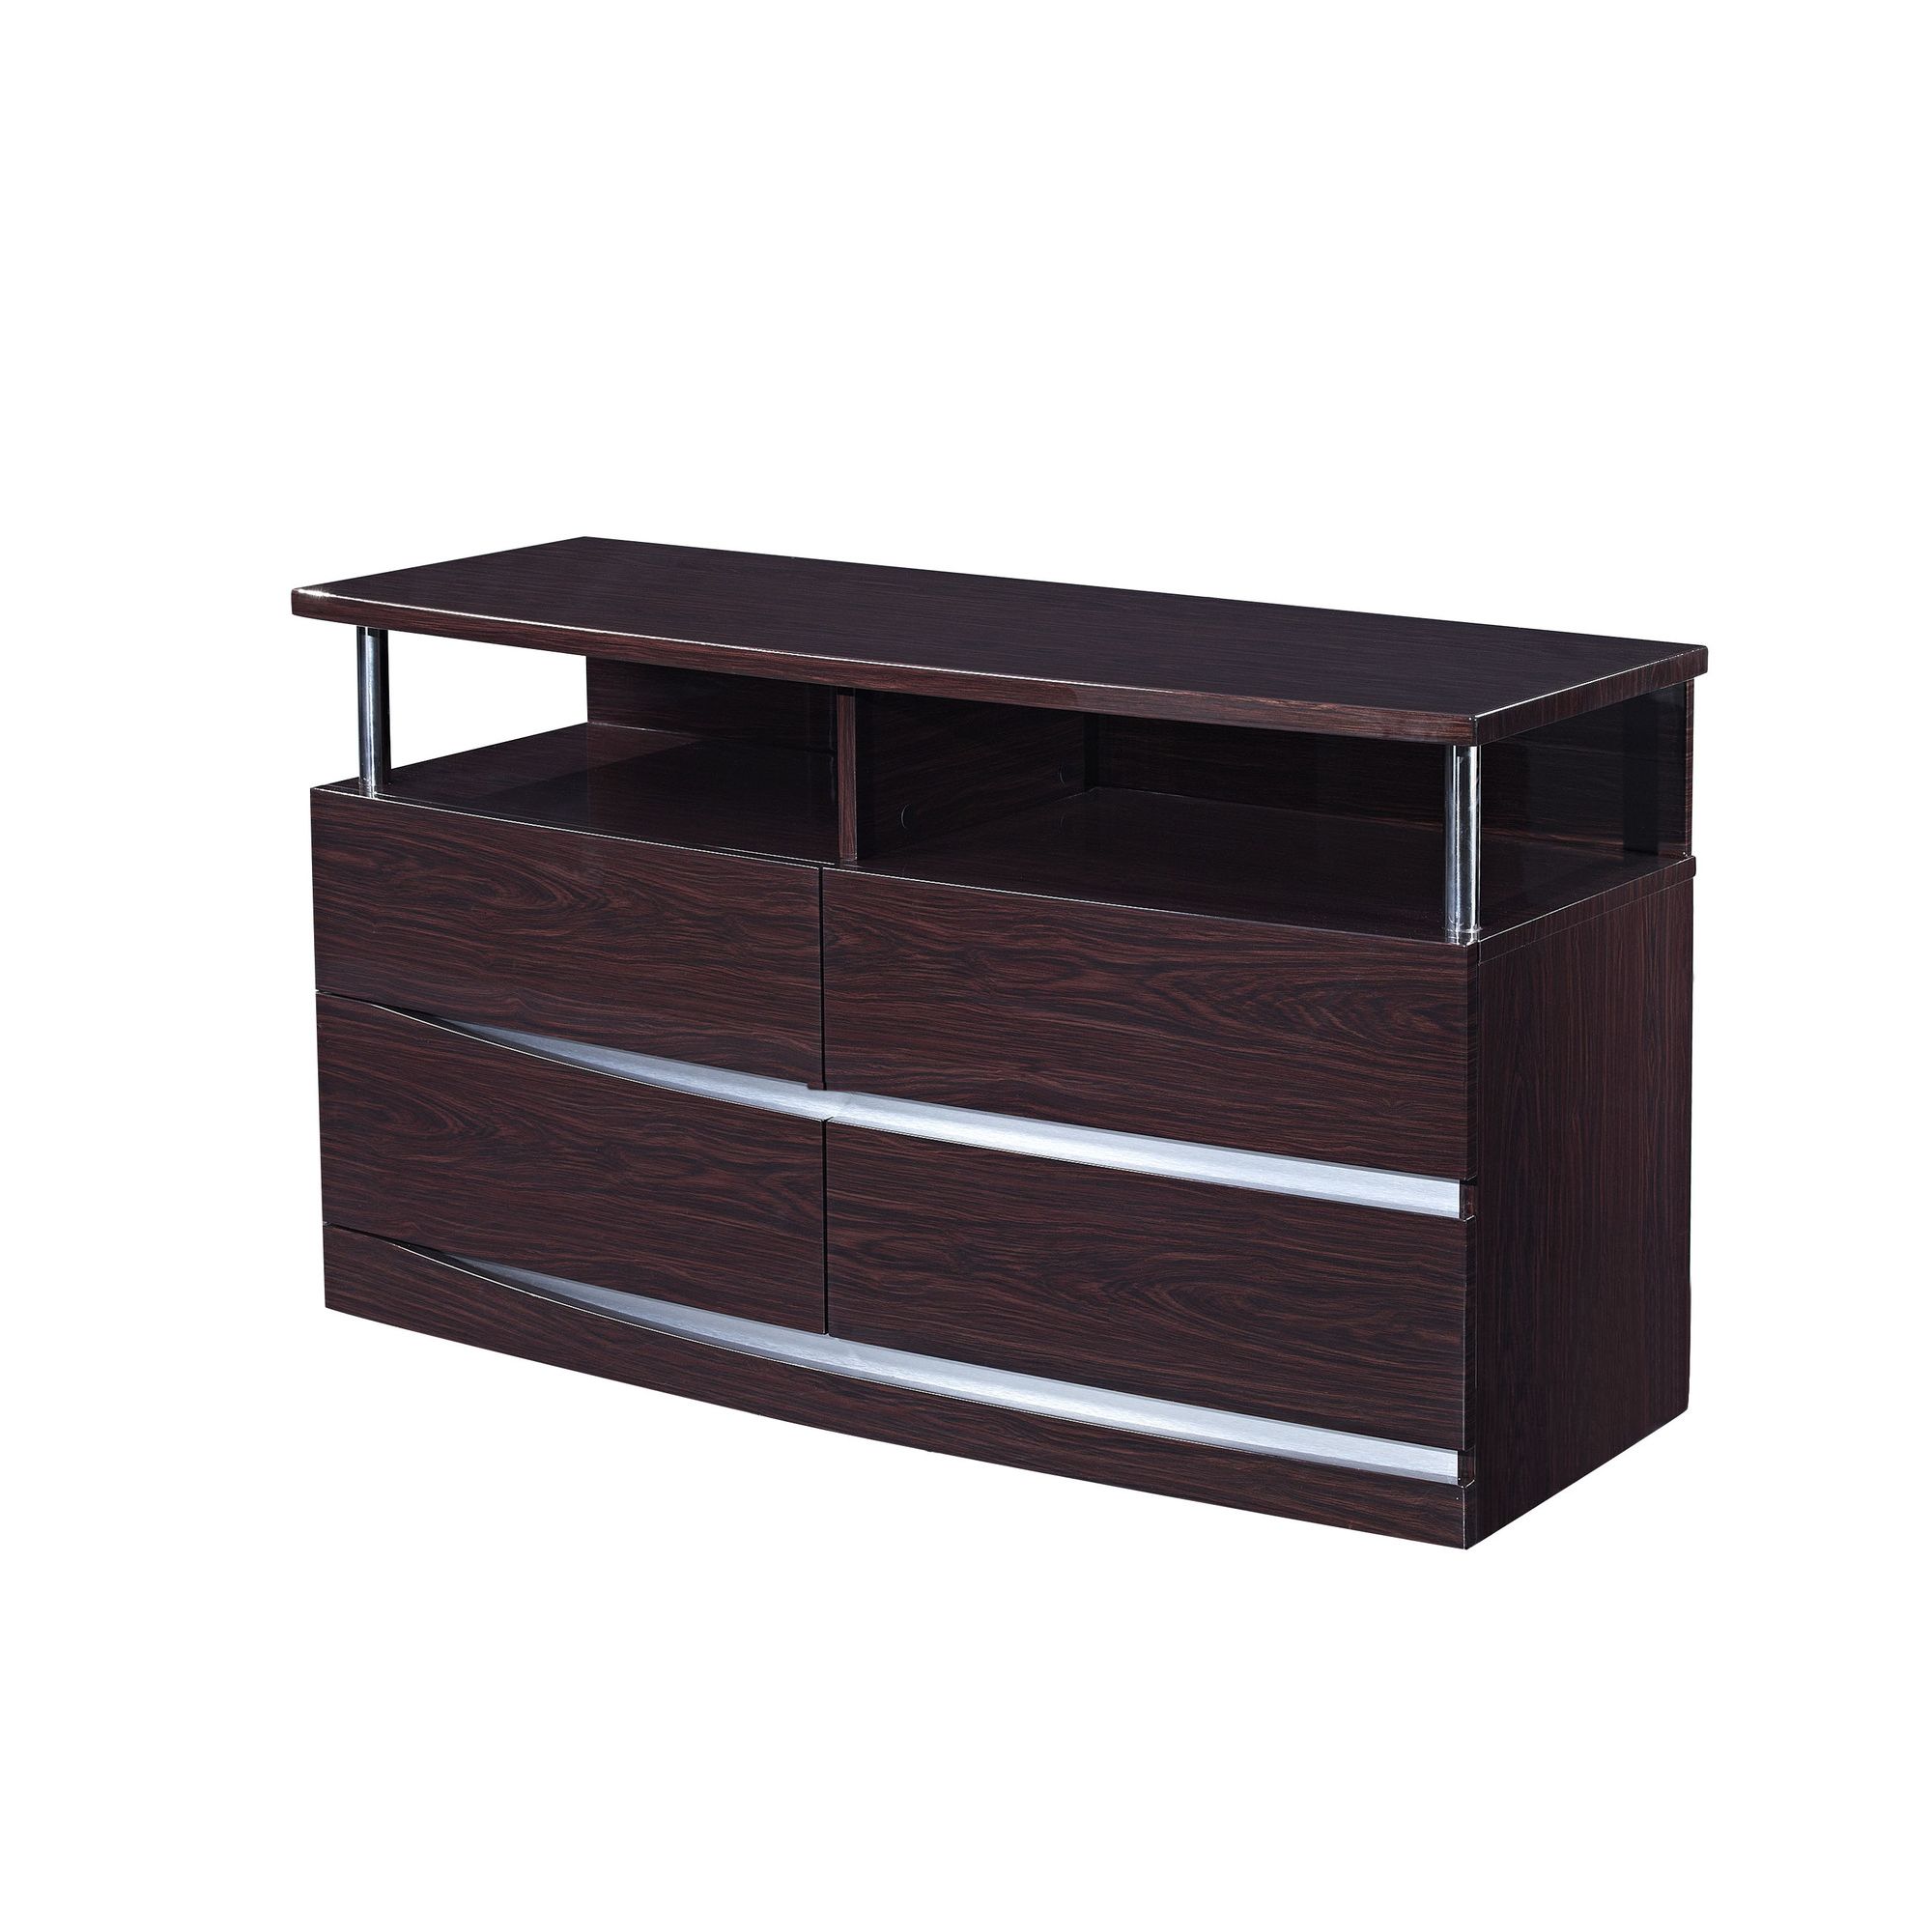 Furniture Link Plaza 4 Drawer Cabinet - White at Tesco Direct